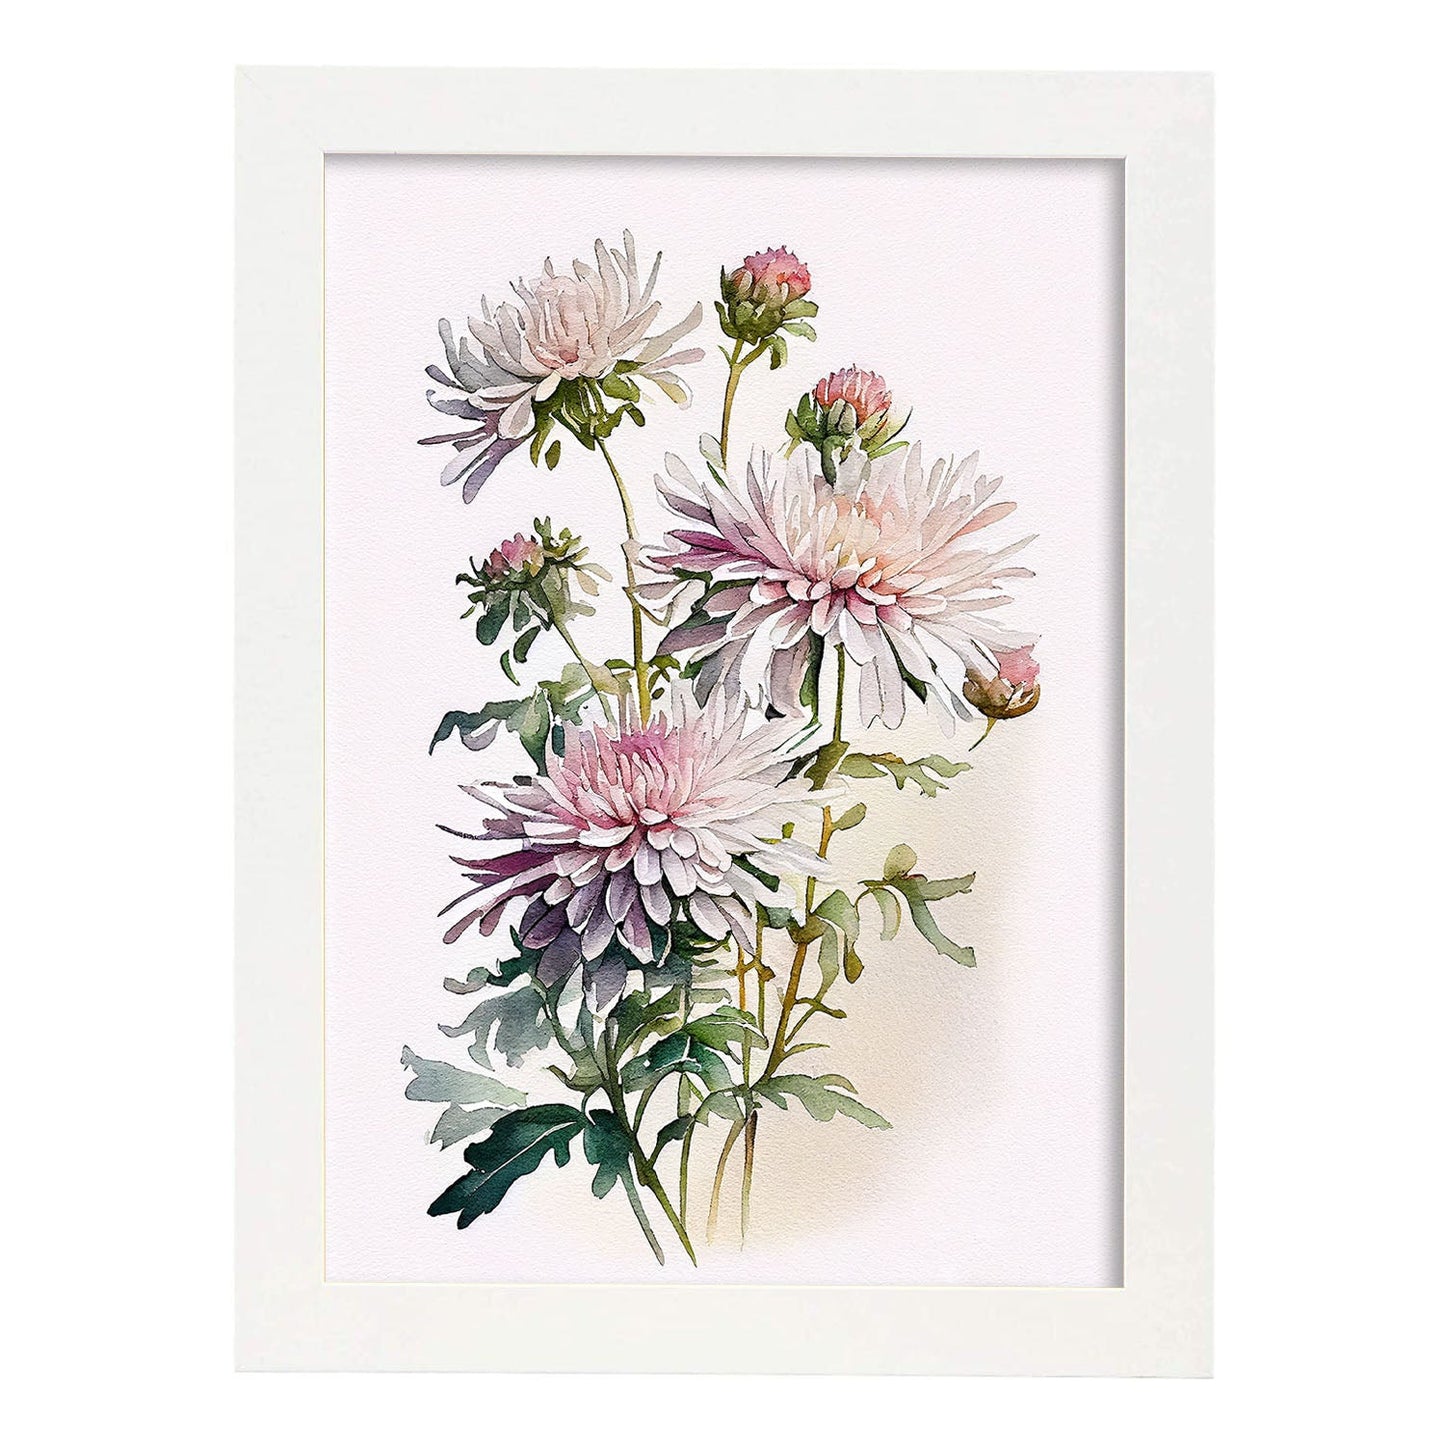 Nacnic watercolor minmal Chrysanthemum_3. Aesthetic Wall Art Prints for Bedroom or Living Room Design.-Artwork-Nacnic-A4-Marco Blanco-Nacnic Estudio SL